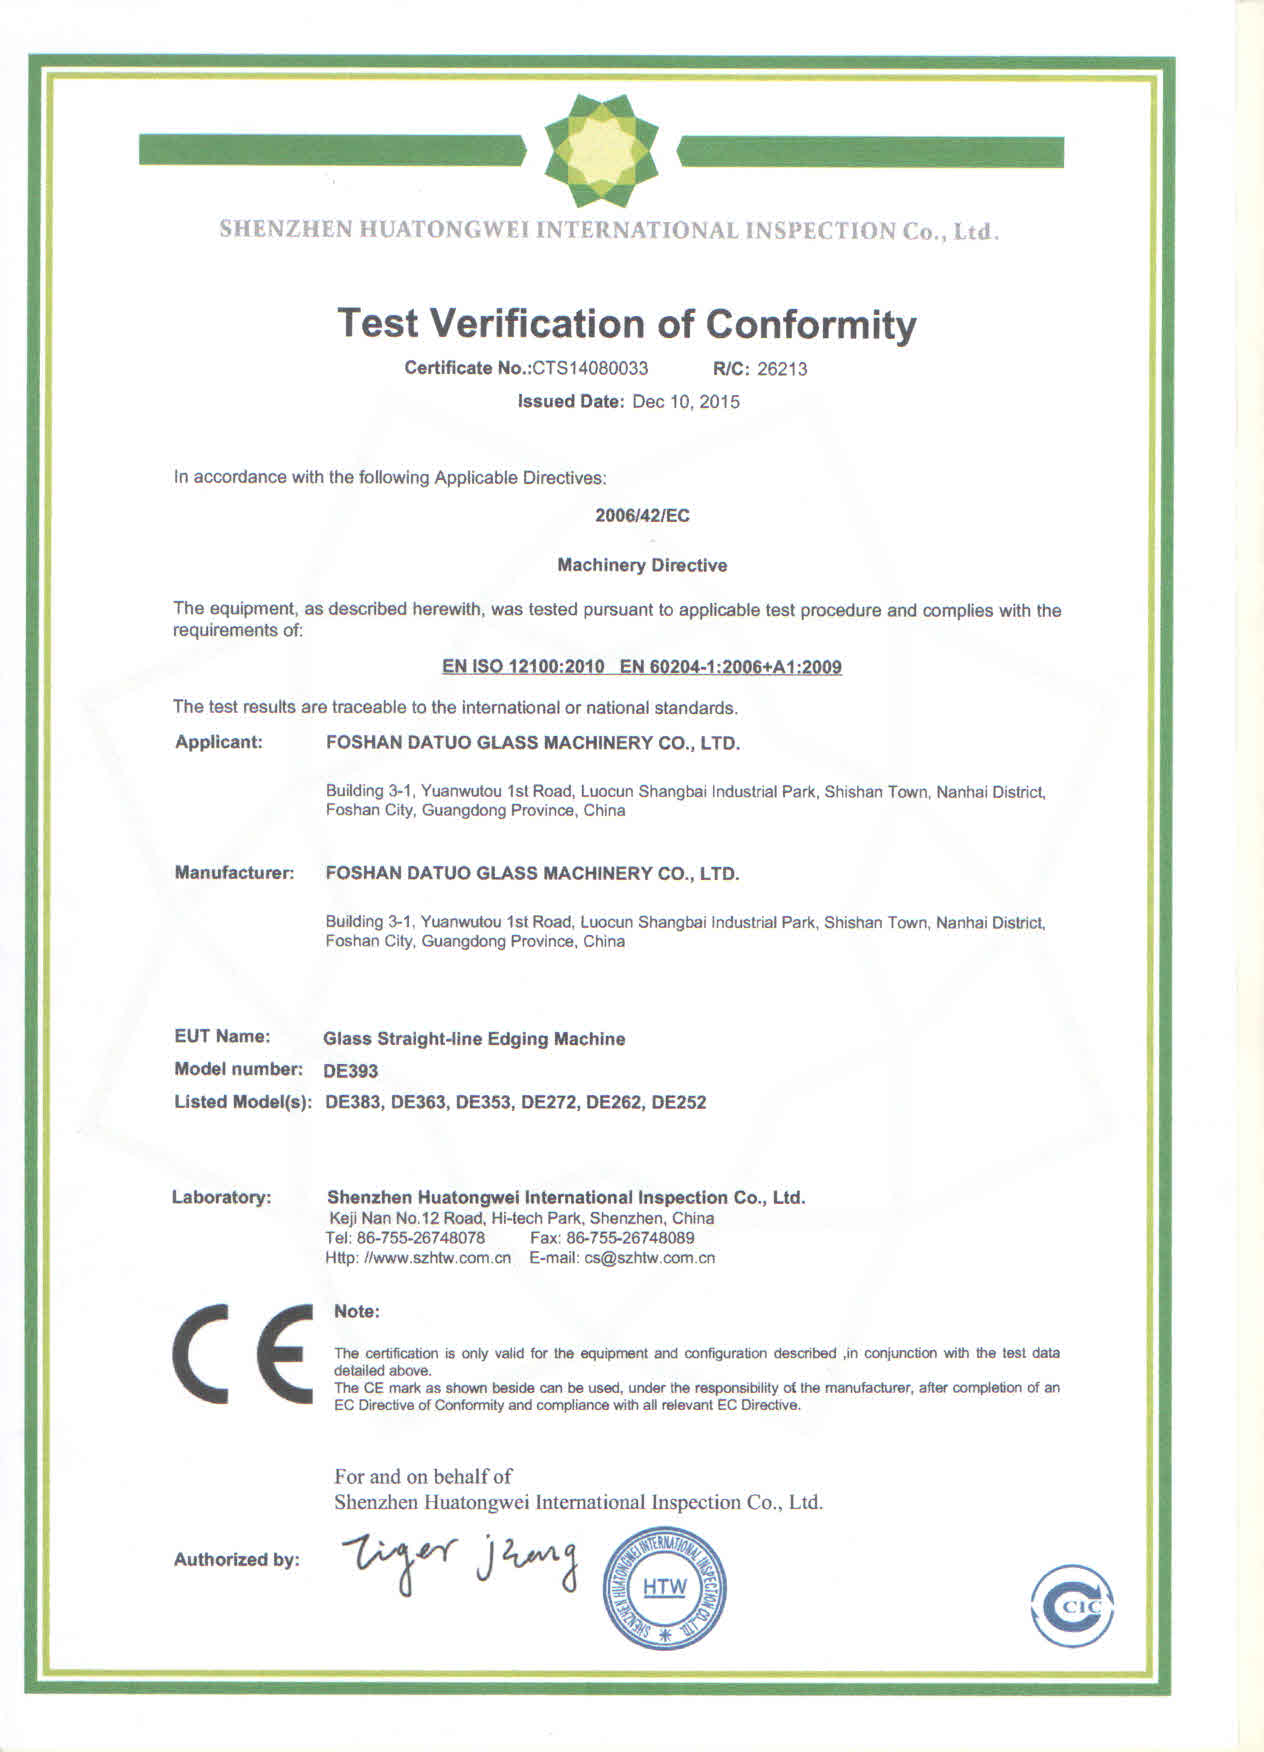 DE393 玻璃磨边机 CE 证书